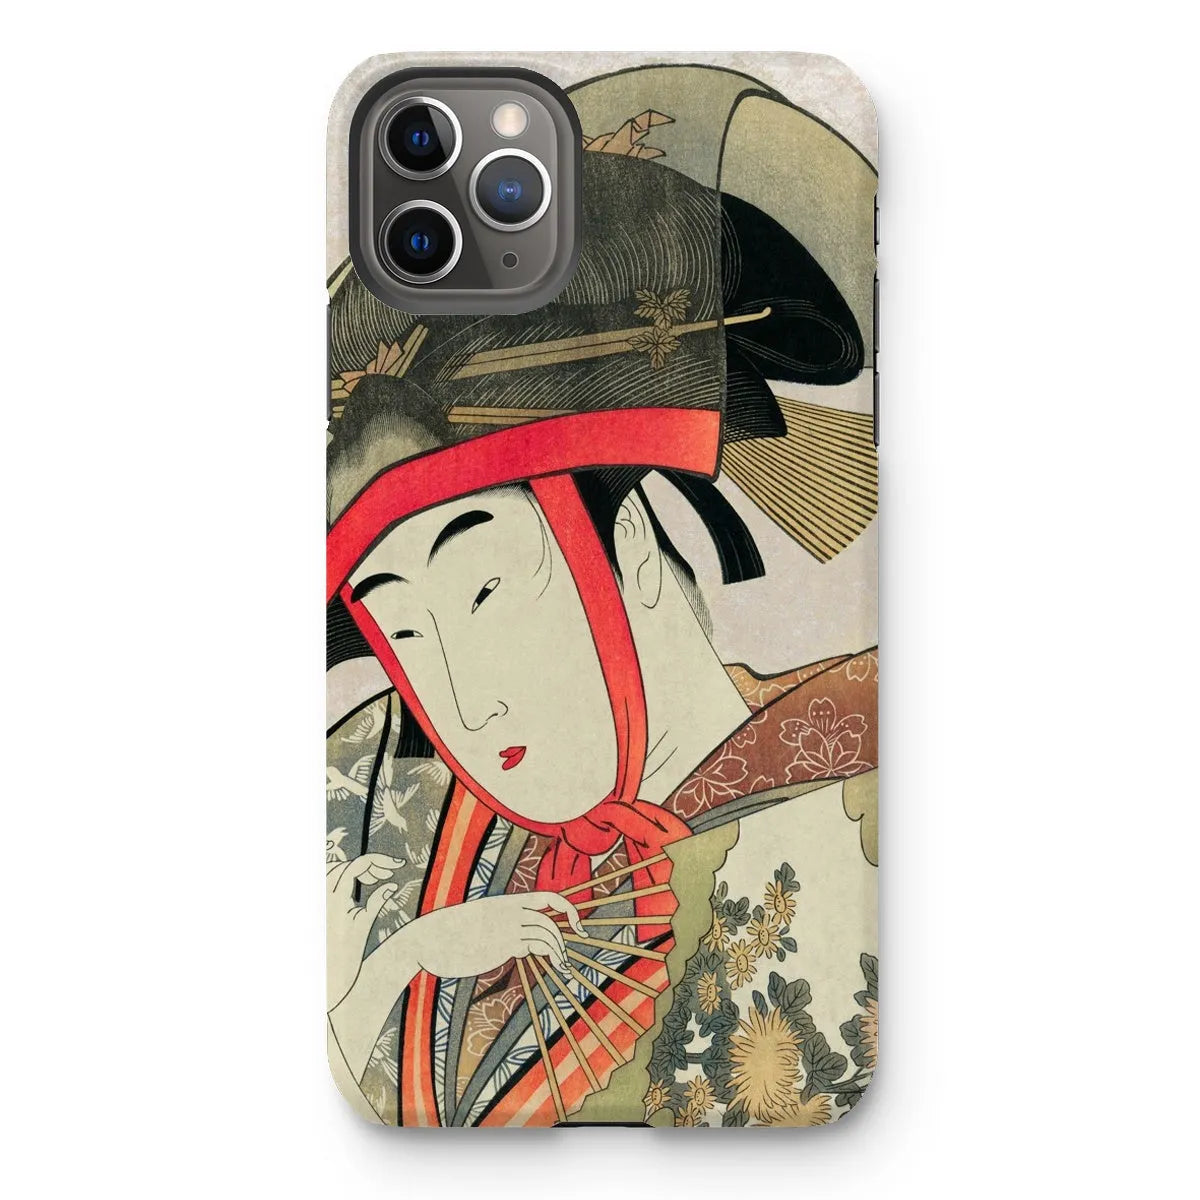 Yoshiwara Suzume - Japanese Ukiyo-e Art Phone Case - Utamaro - Iphone 11 Pro Max / Matte - Mobile Phone Cases